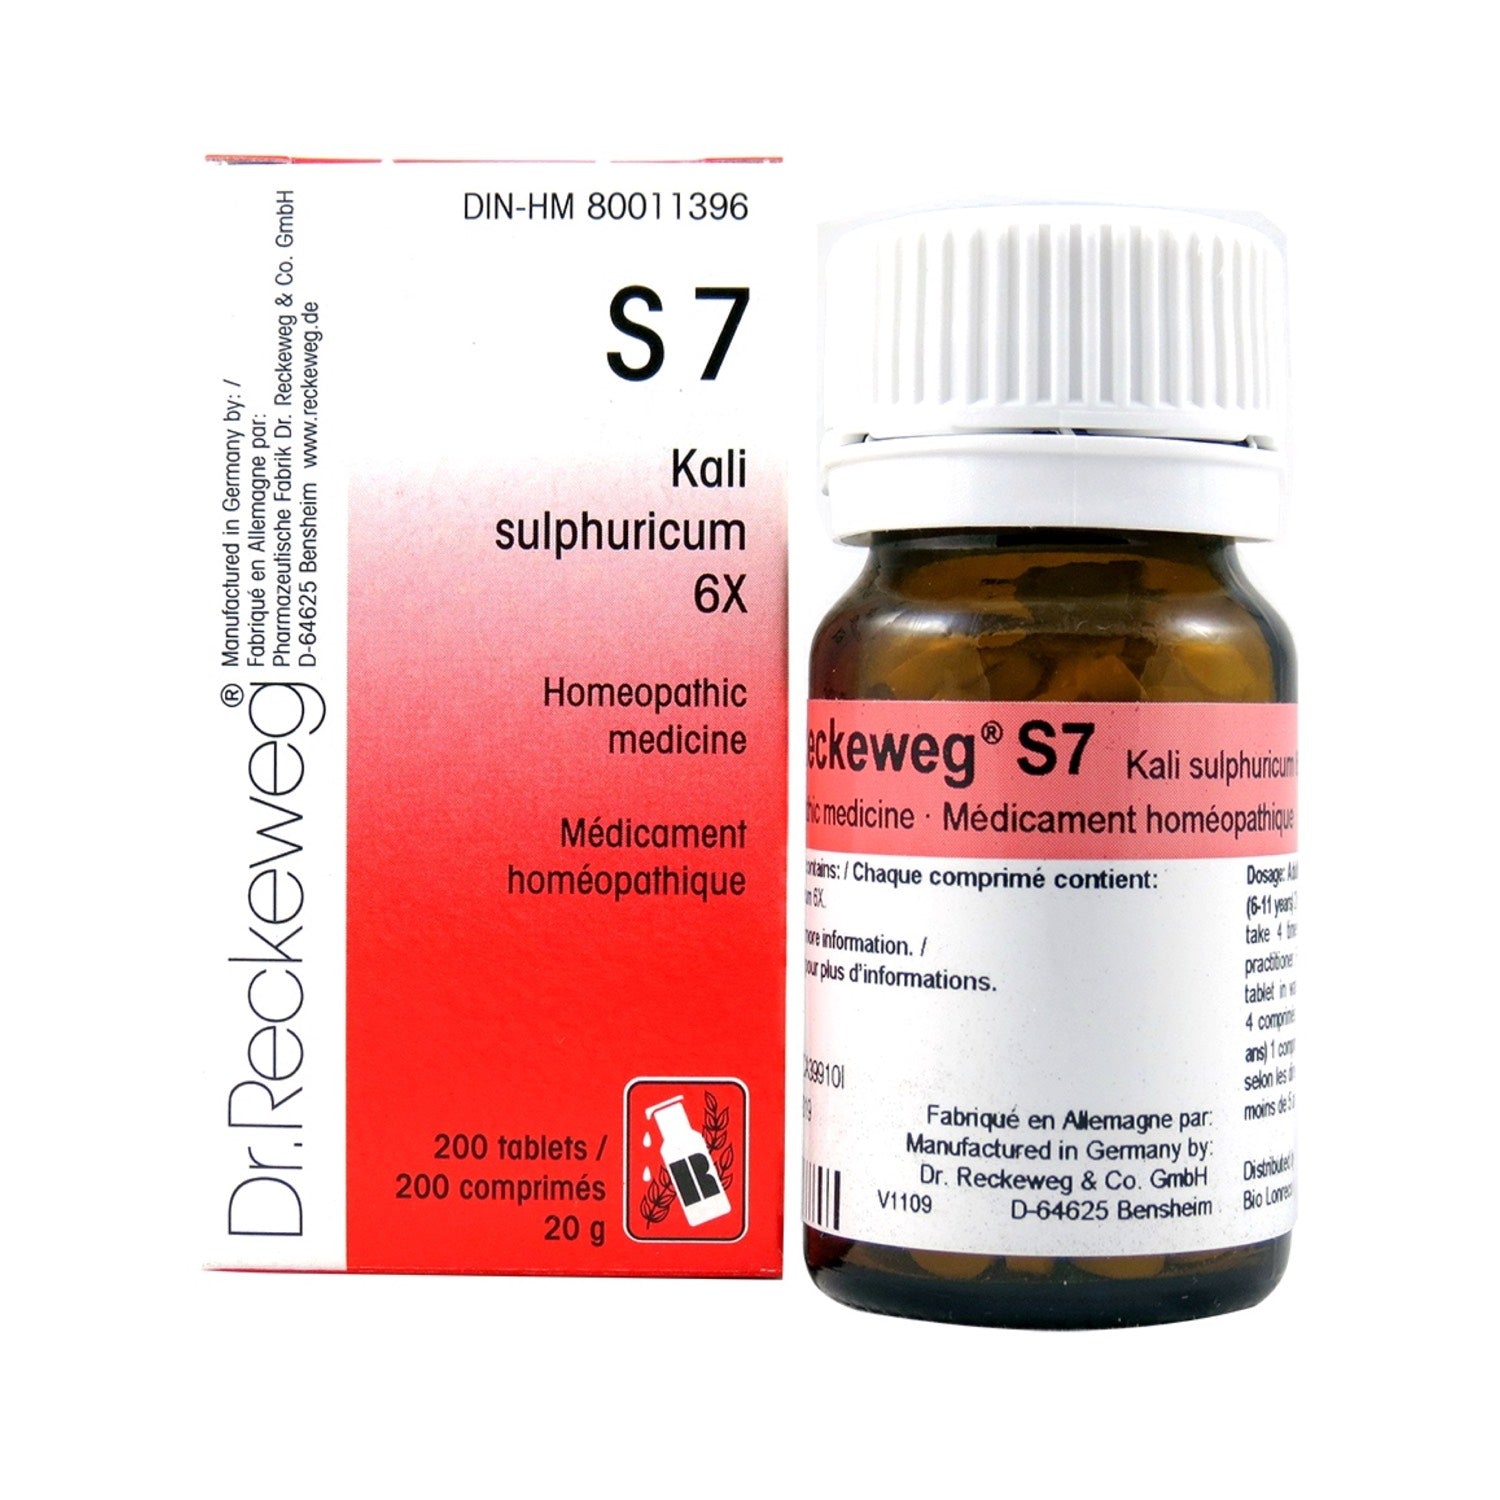 S7 Kali sulphuricum Homeopathic medicine Schuessler salt 6X 200 tablets (20 g)